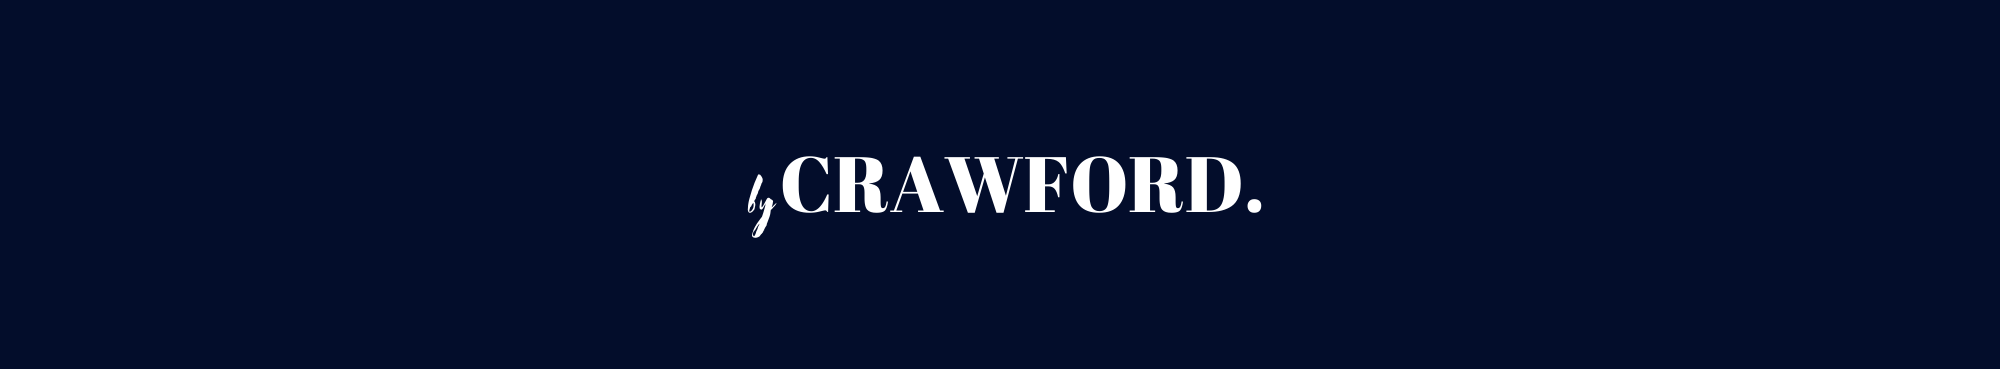 Sam Crawford's profile banner